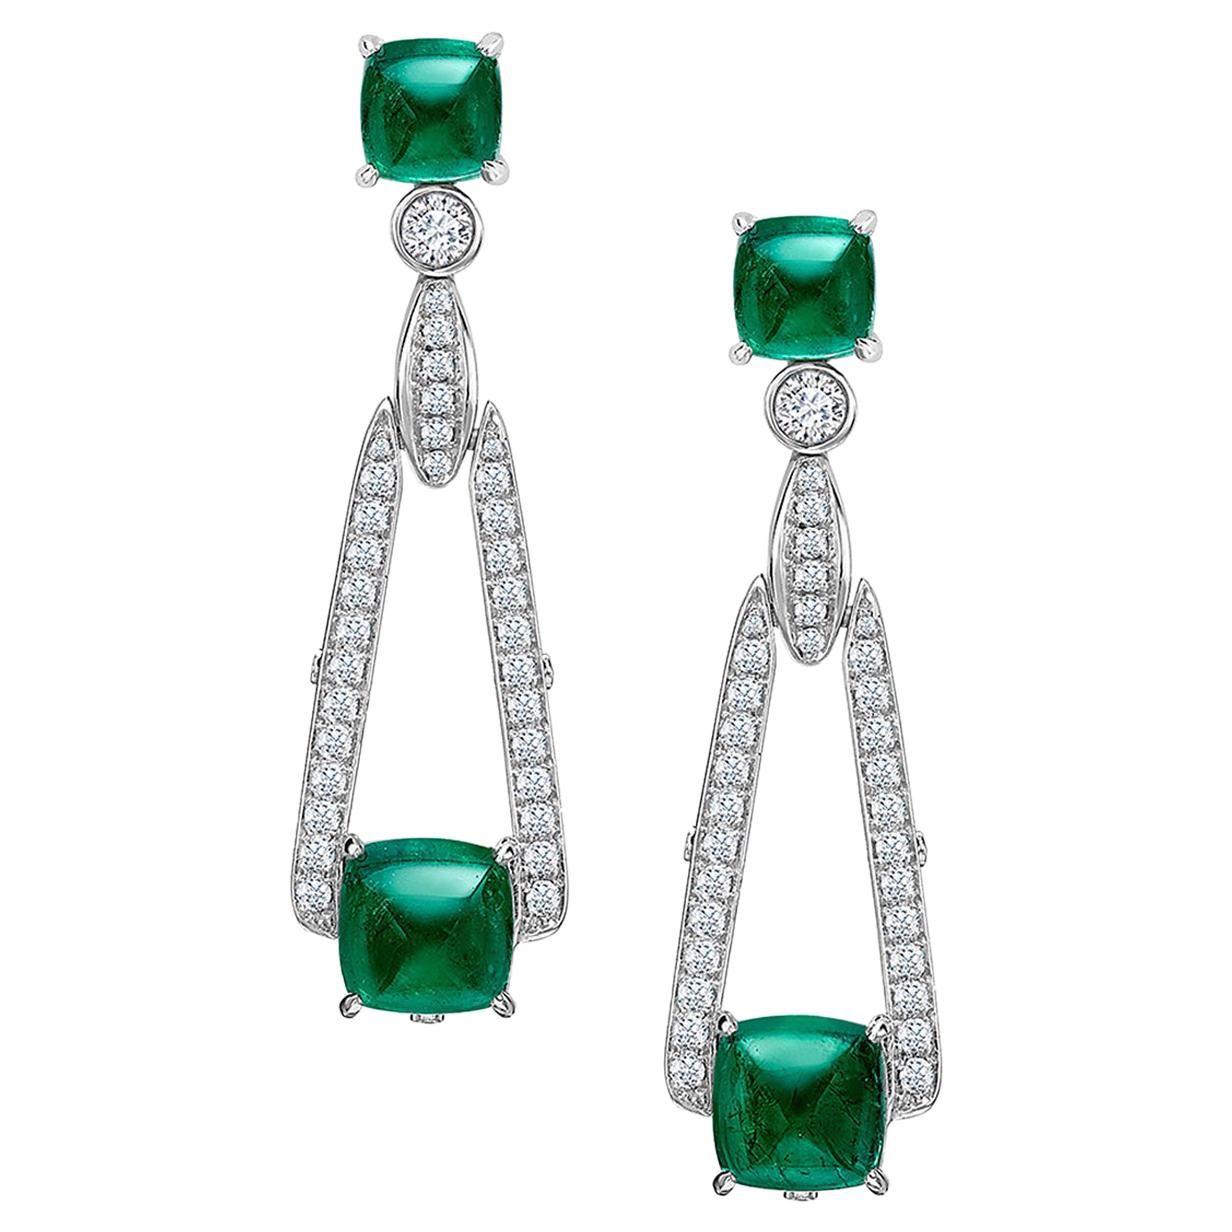 Fabergé Empress Emerald Earrings For Sale